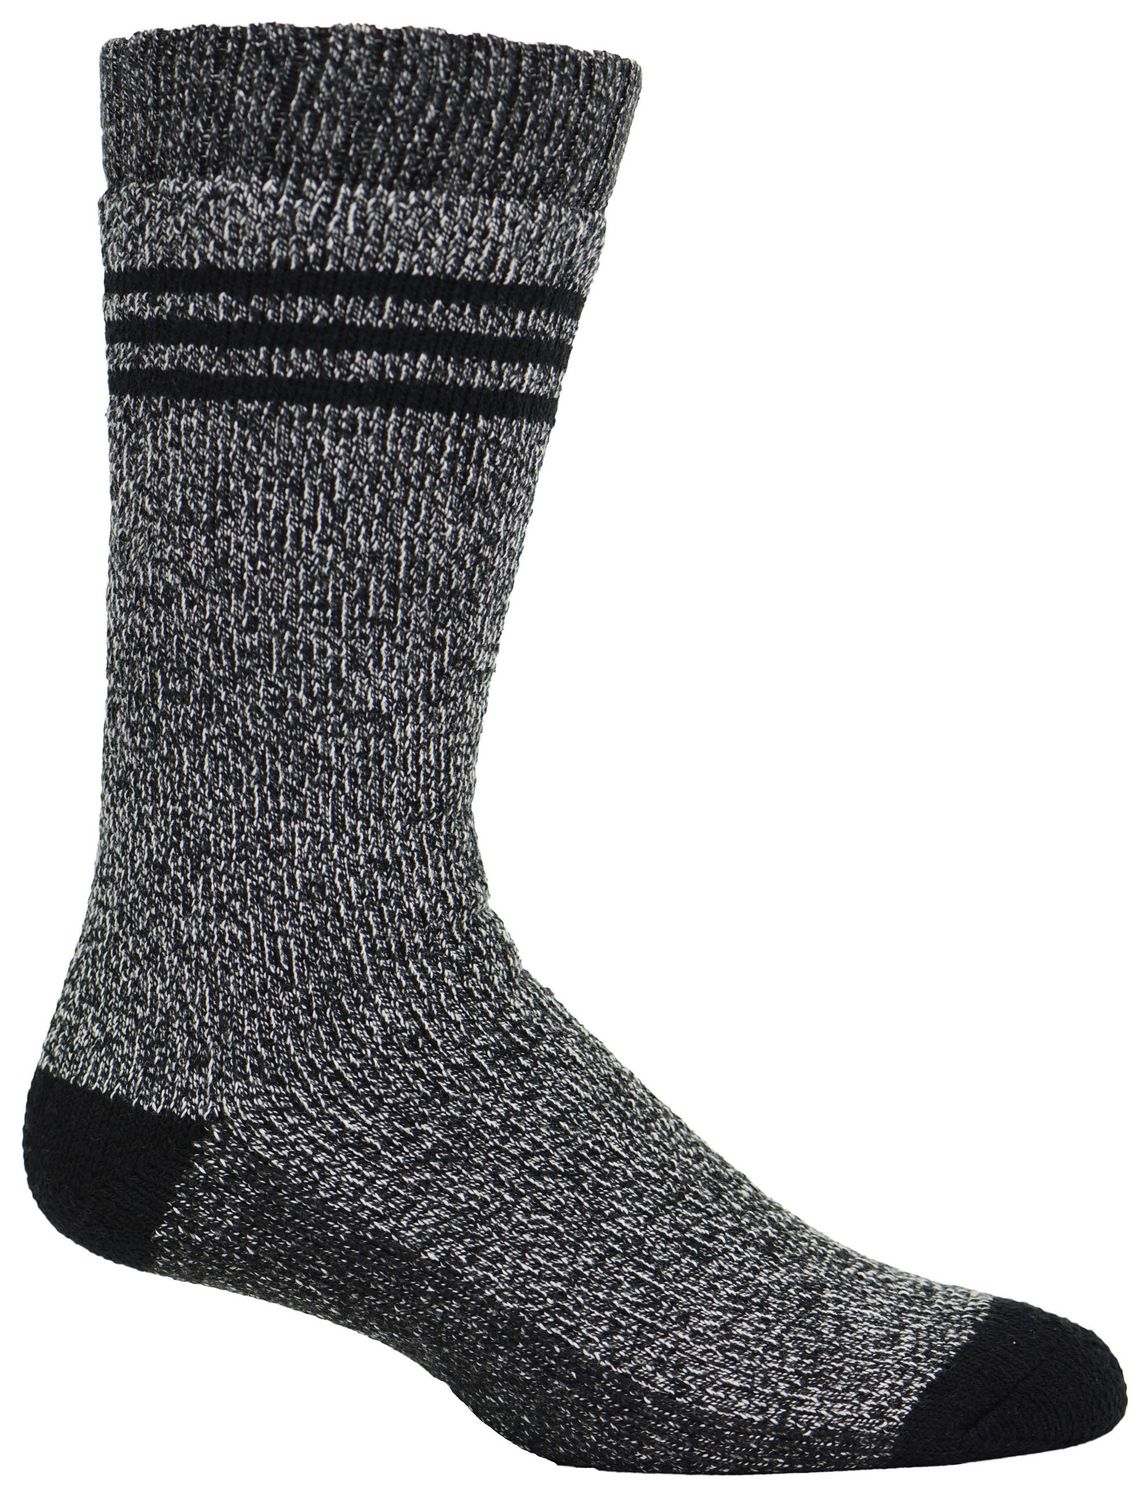 Kodiak Men's 2-Pair Thermal Cotton Socks | Walmart Canada